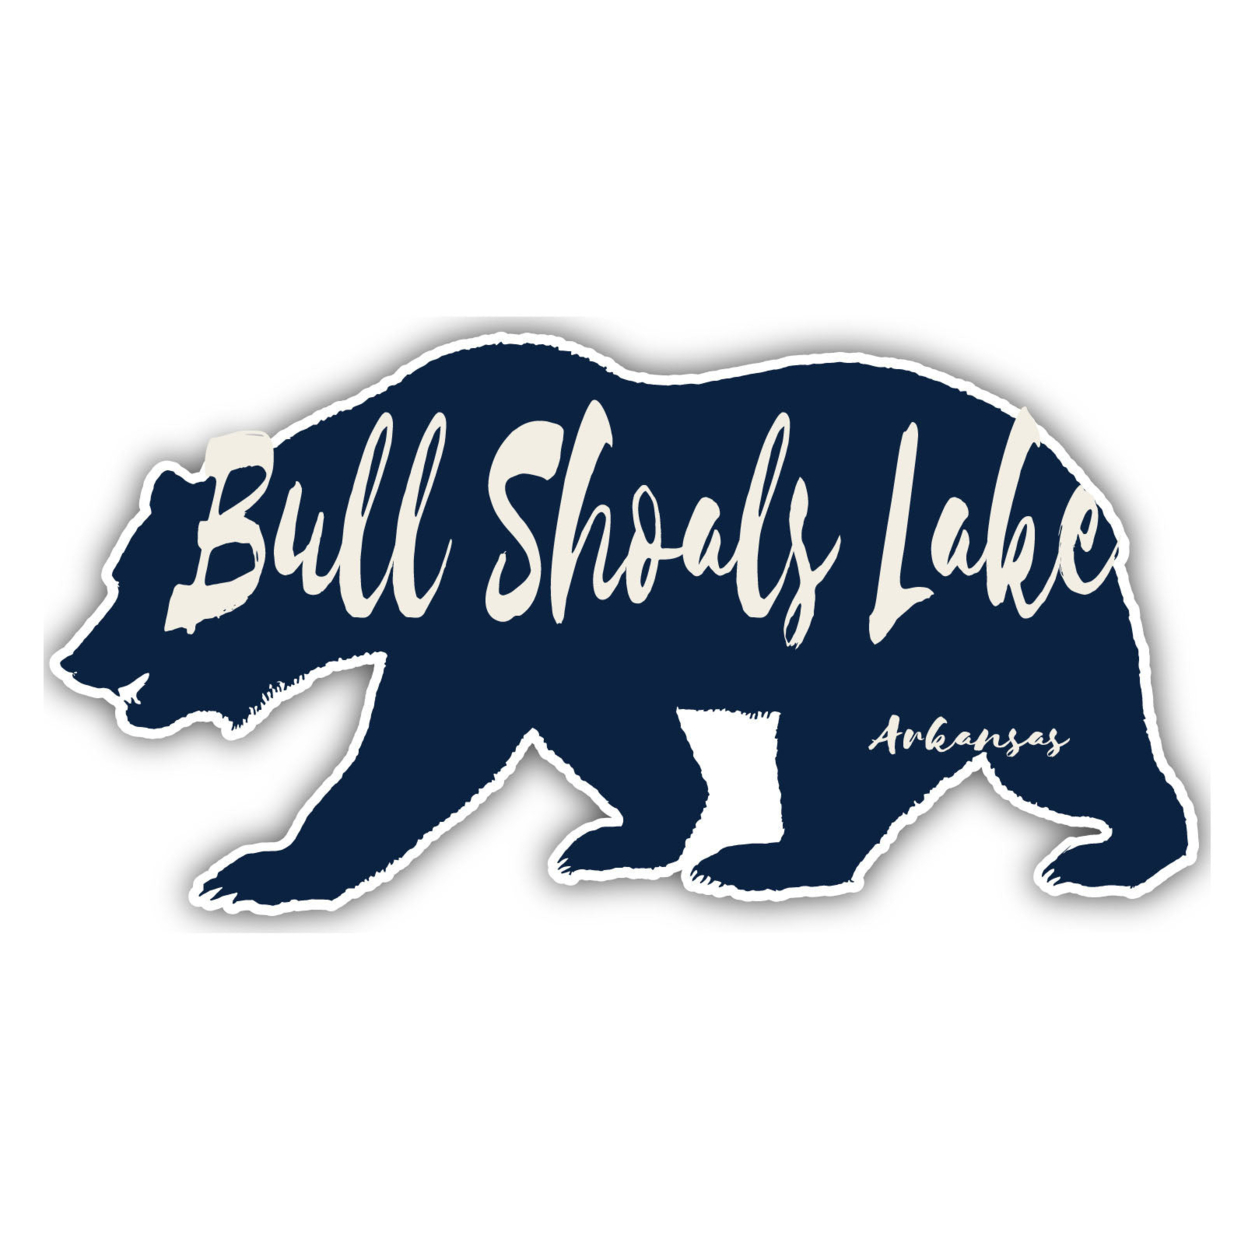 Bull Shoals Lake Arkansas Souvenir Decorative Stickers (Choose Theme And Size) - Single Unit, 10-Inch, Tent